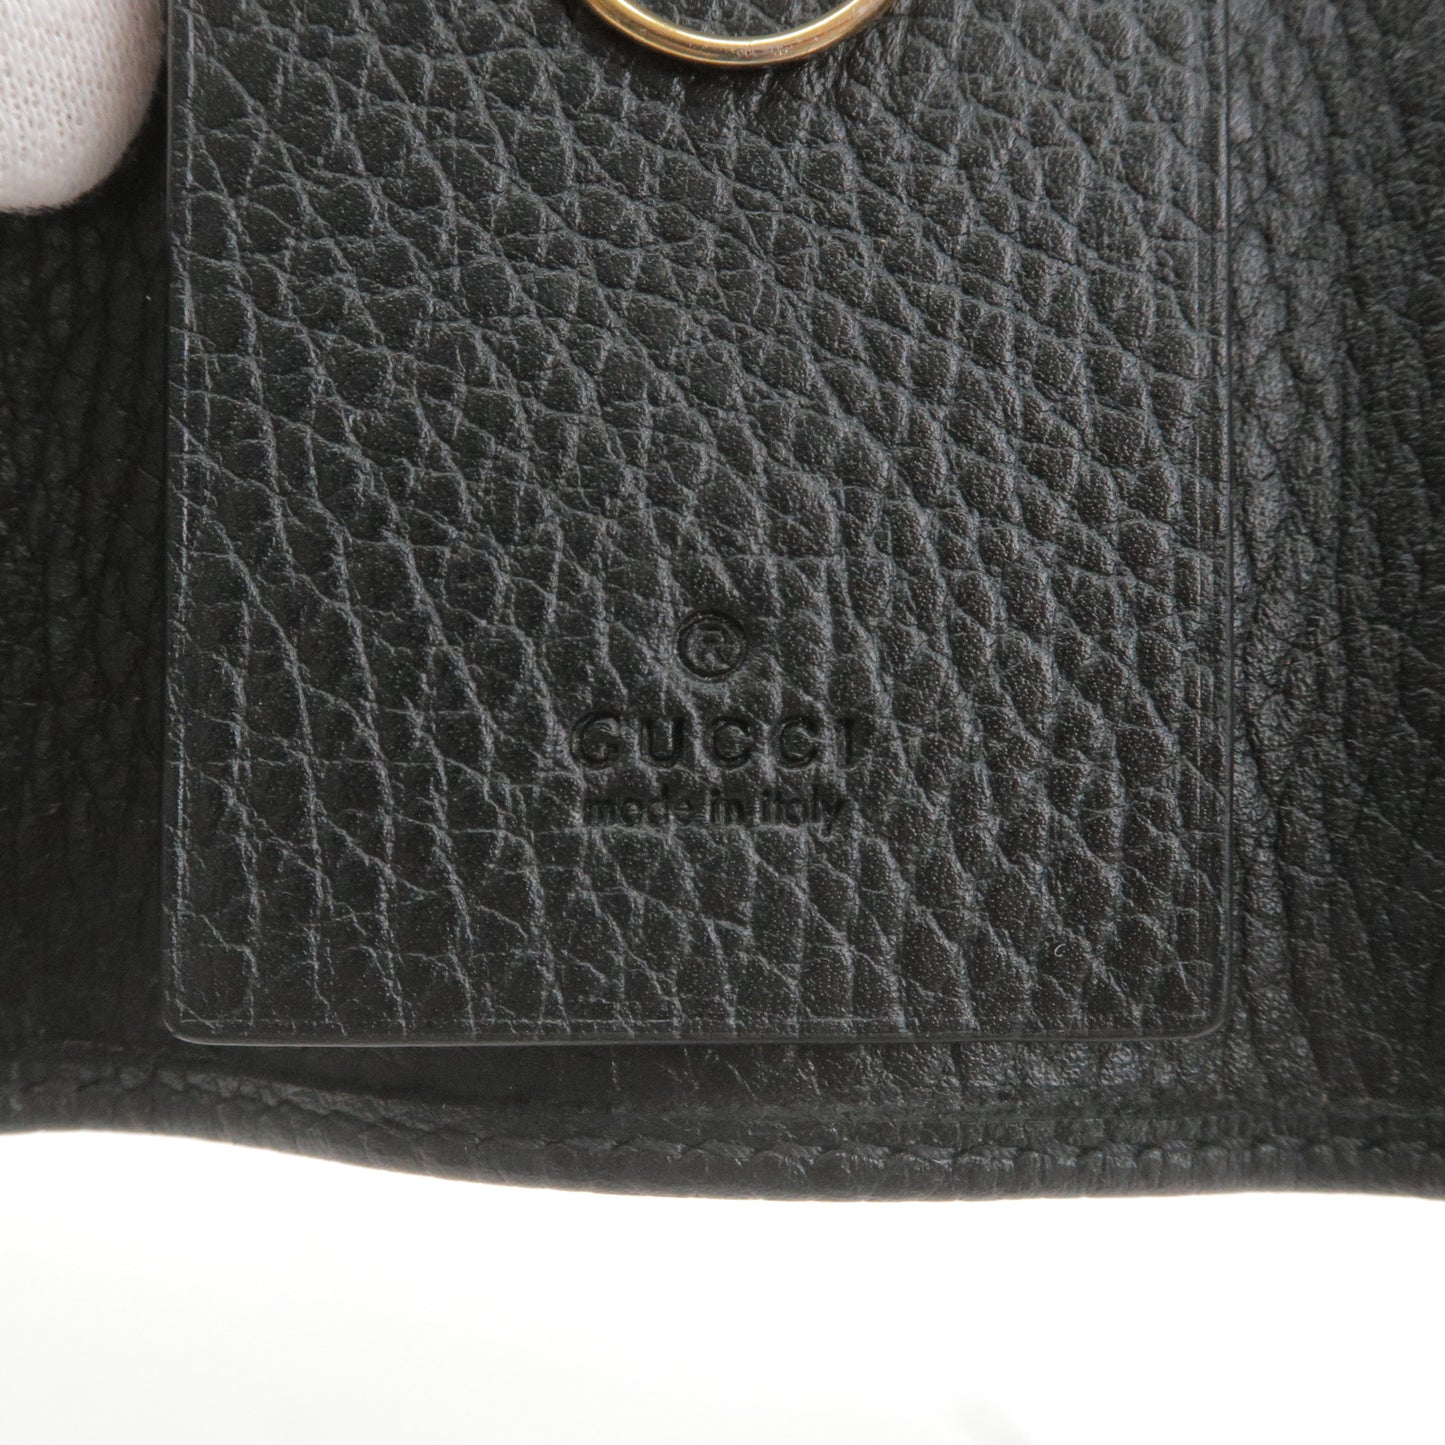 GUCCI GG Marmont Leather 6 Key Case Key Holder Black 456118